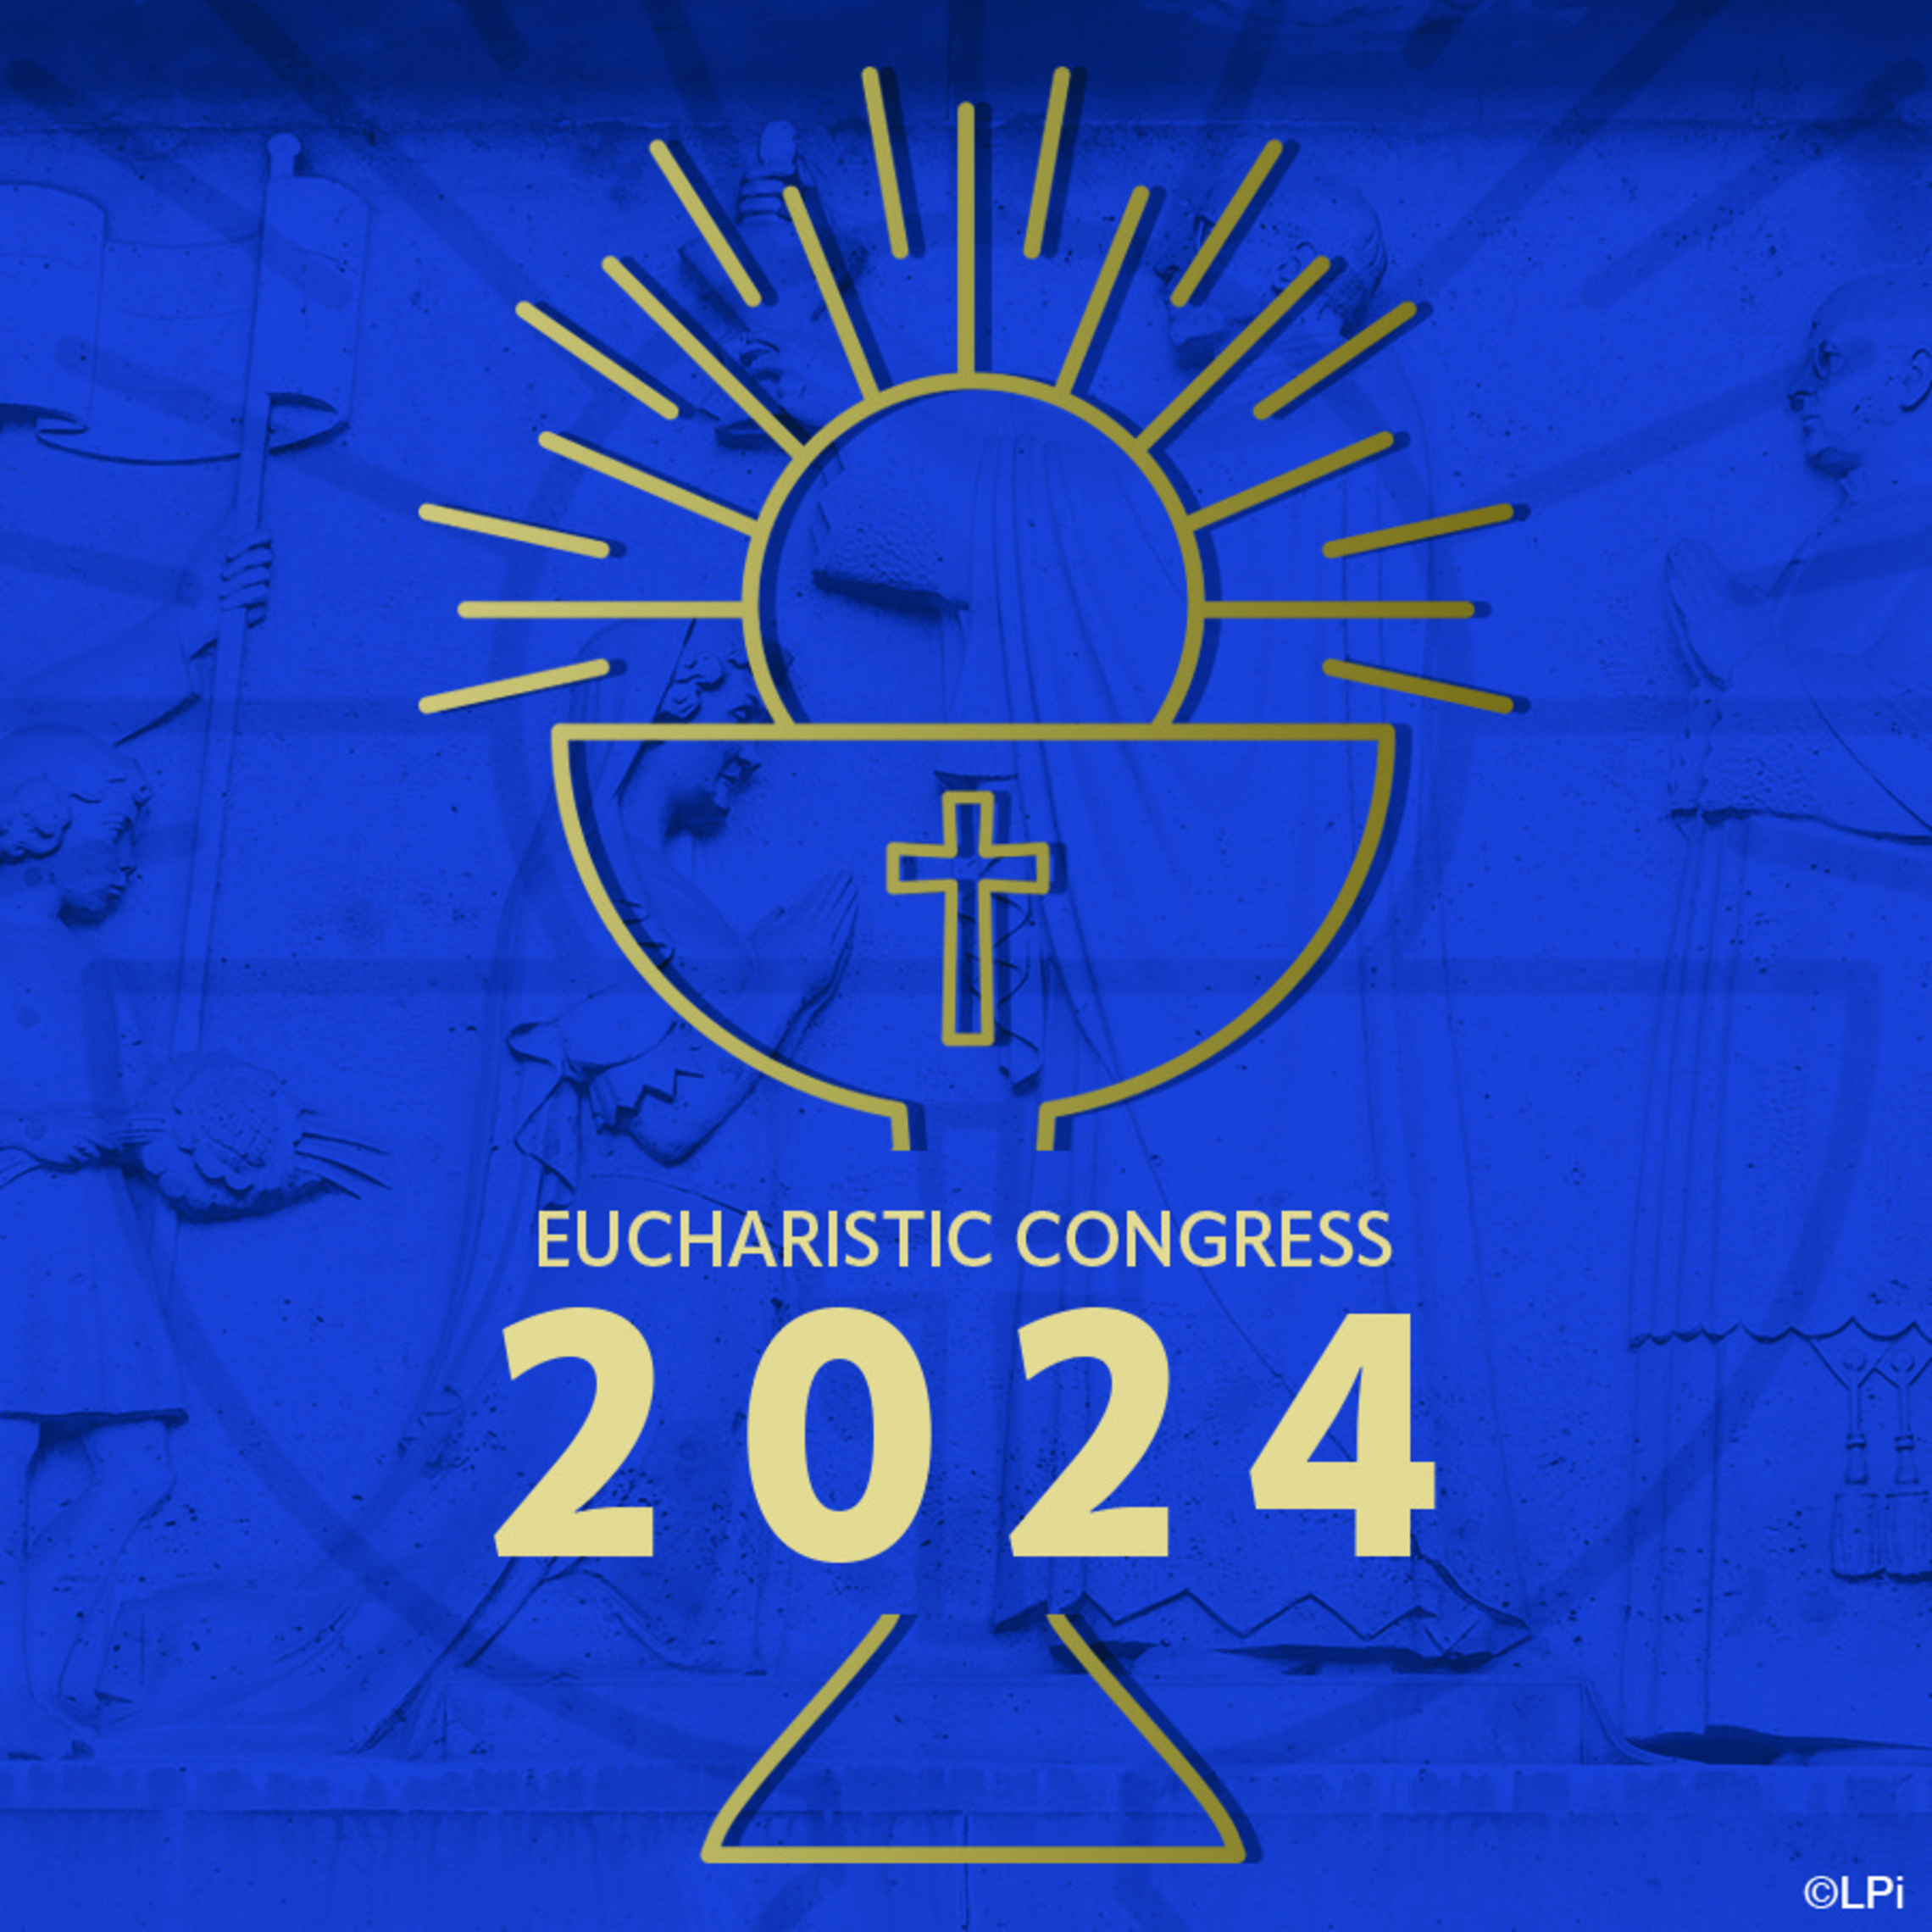 Eucharisticcongress24 23i3 4c